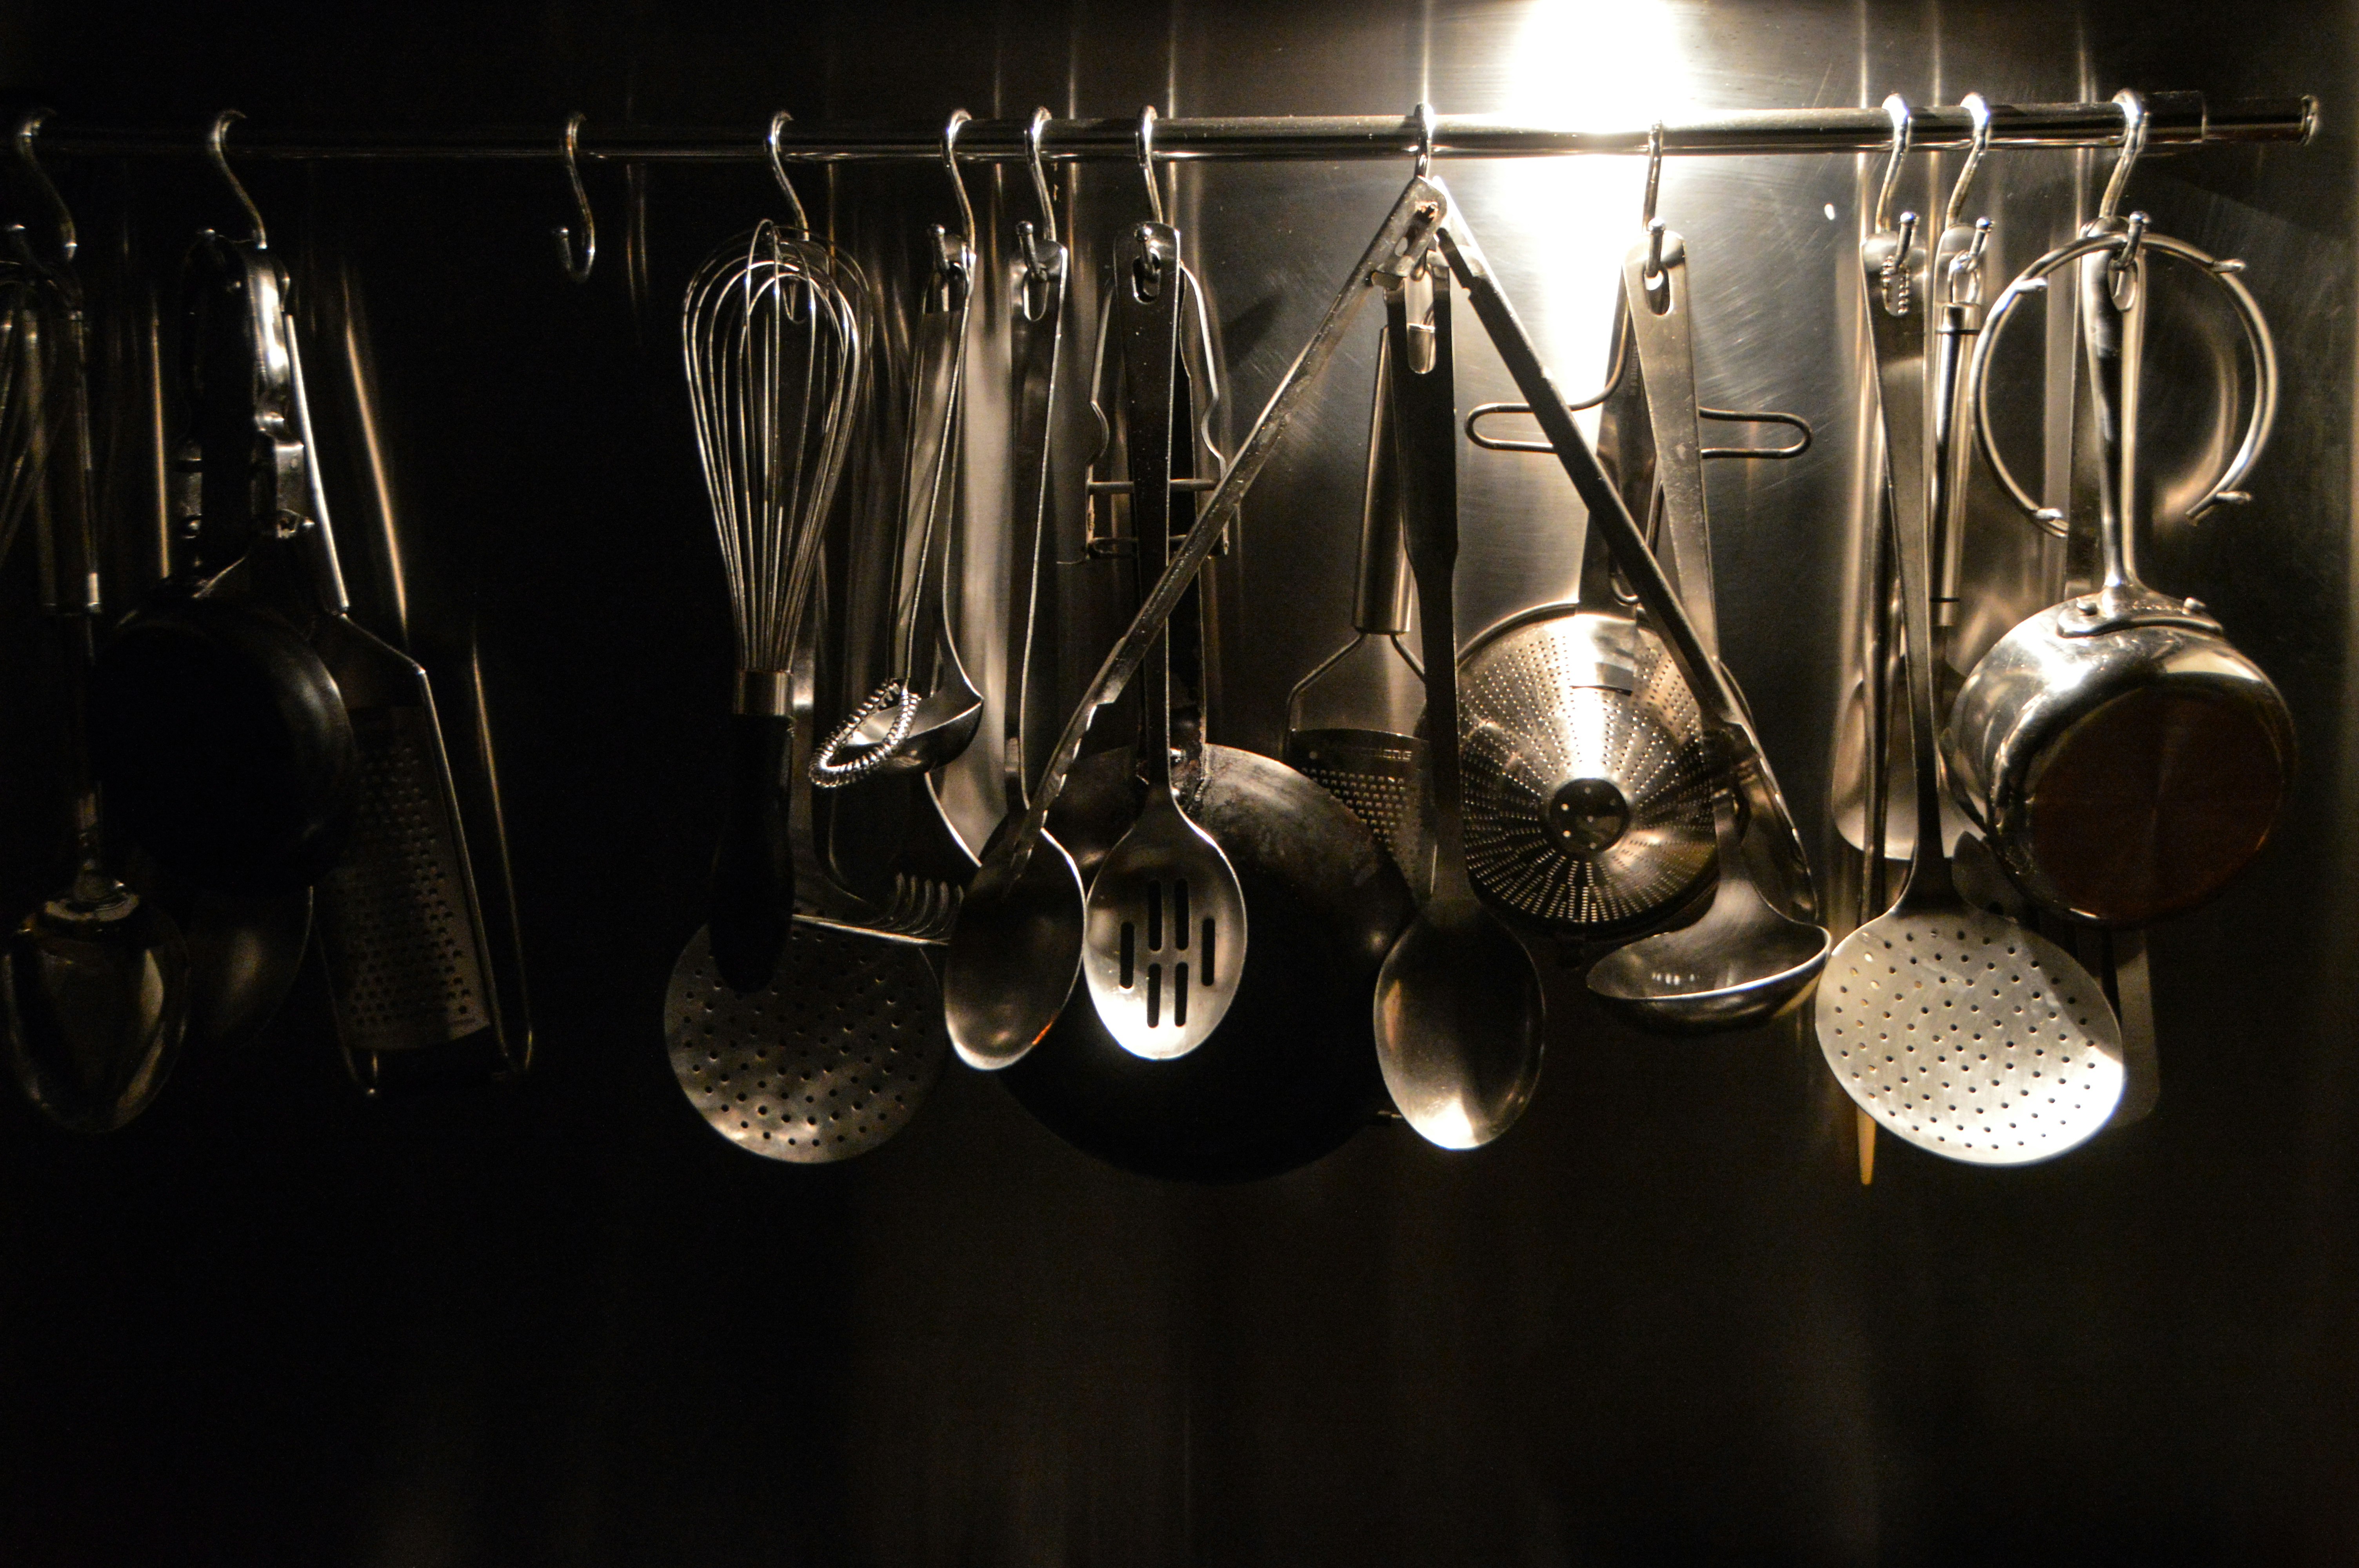 Metal kitchen utensils hinging on a rail. Top lighting and shining edges caught my eye